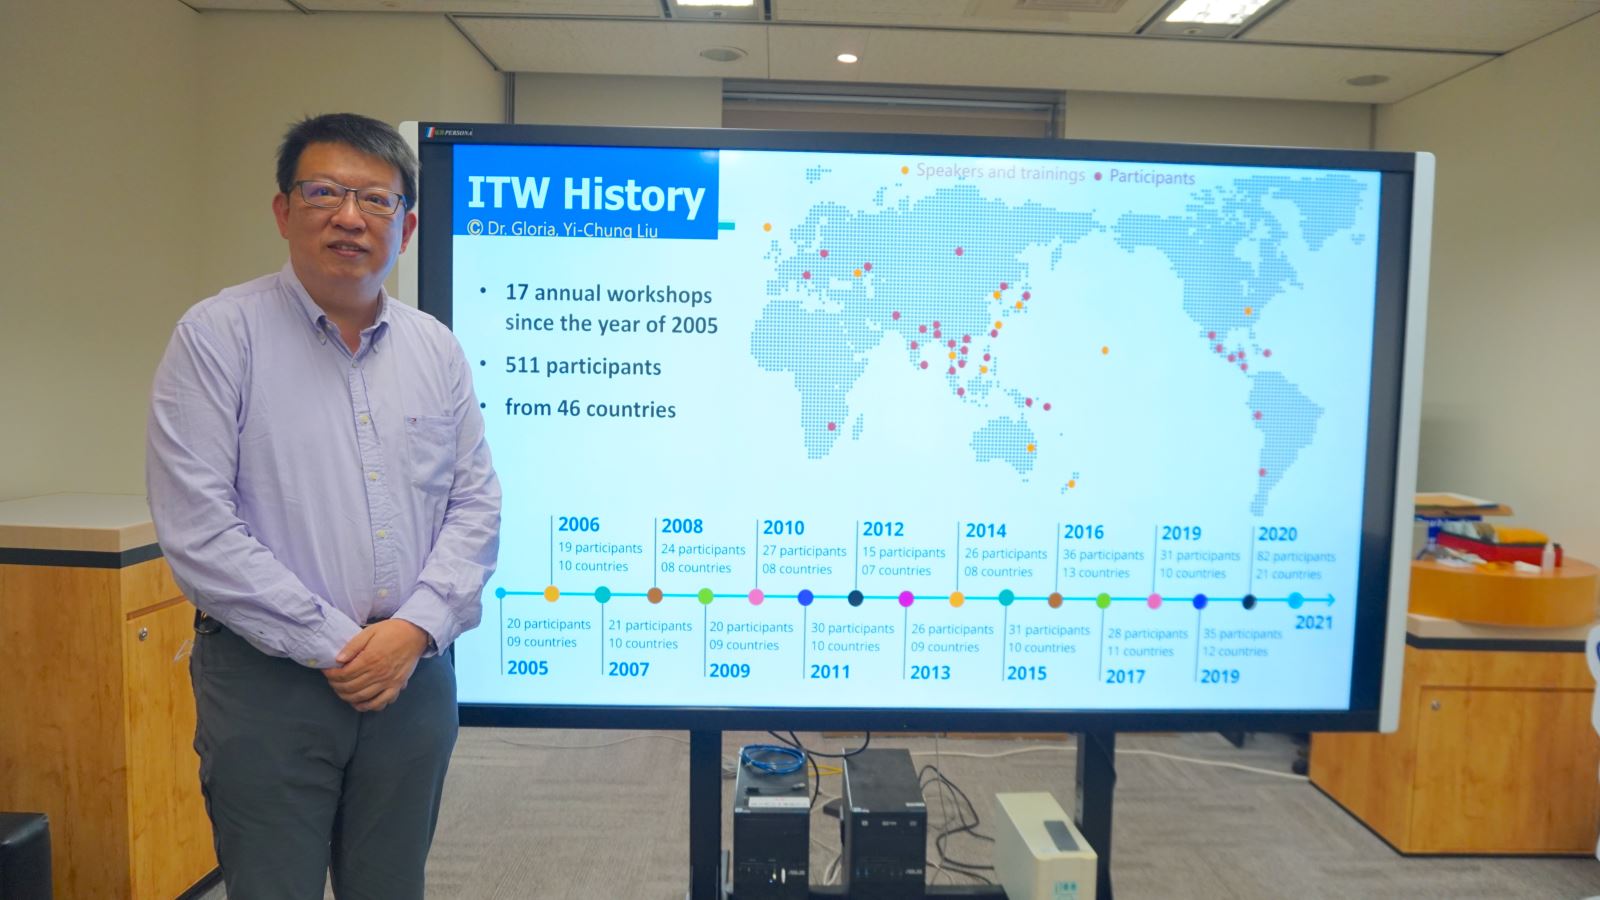 Secretary General Wei-Sen Li Explaining the Long History of ITW